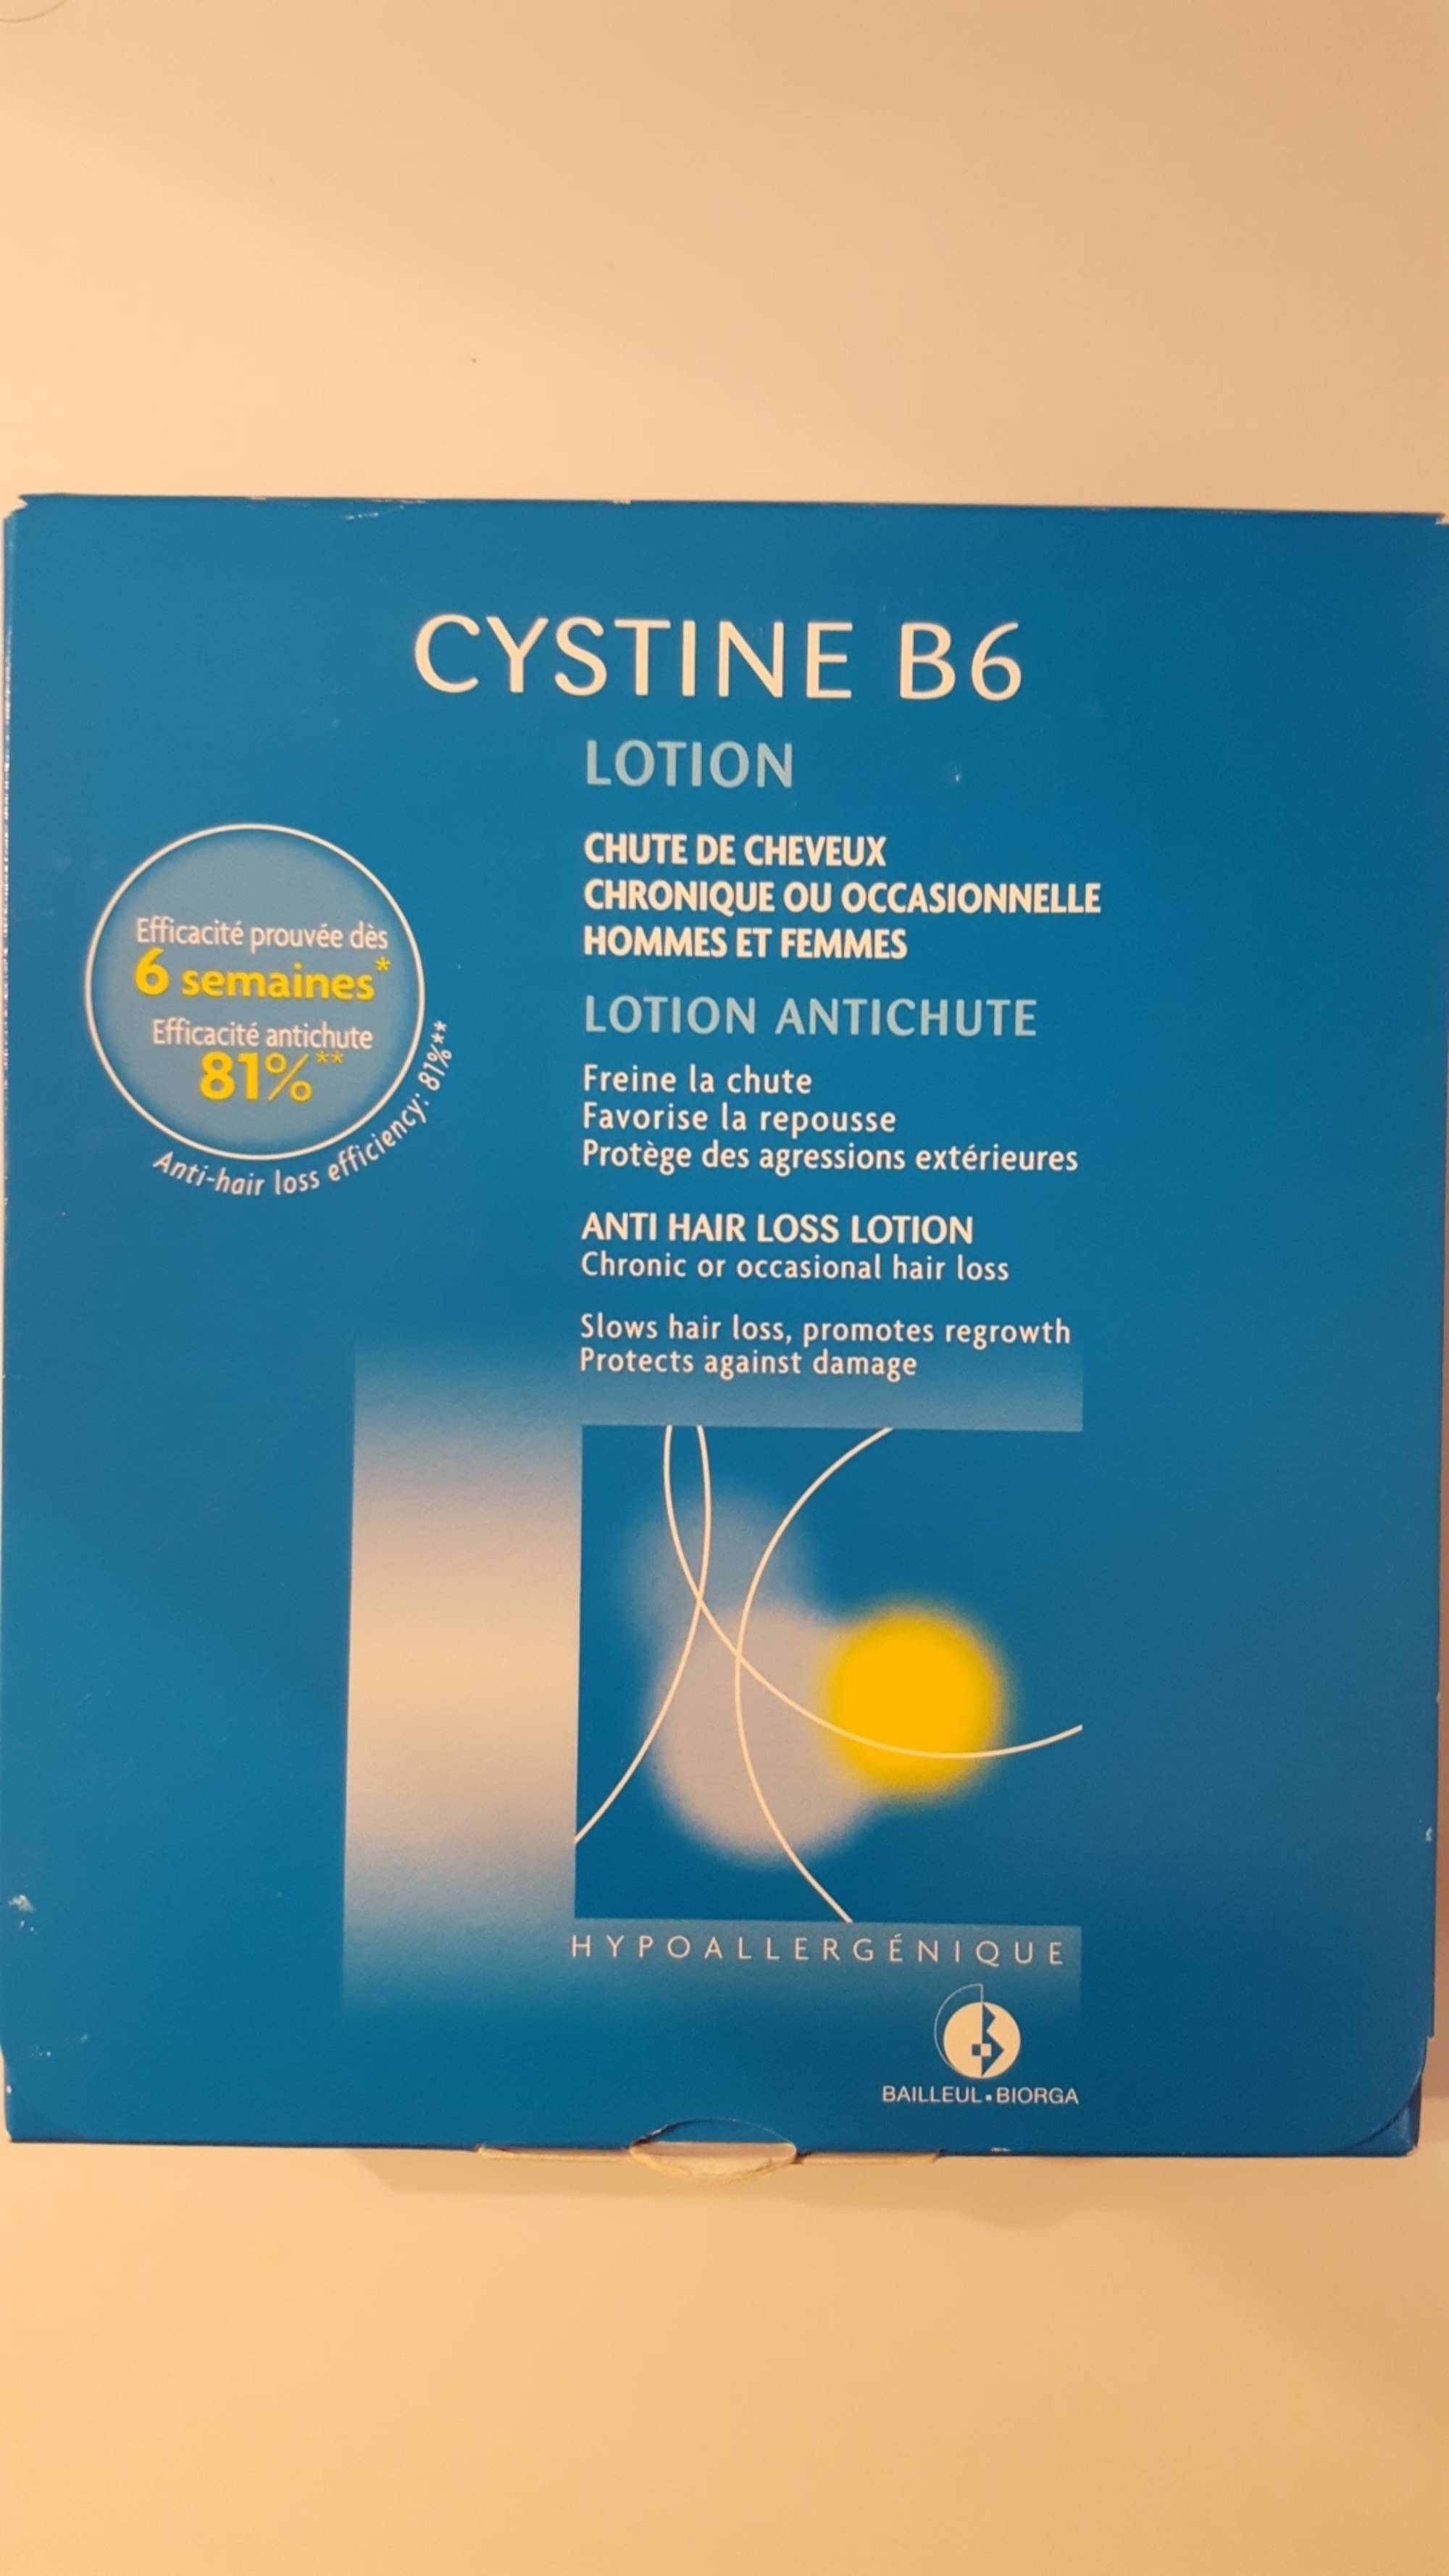 CYSTINE B6 - Lotion antichute